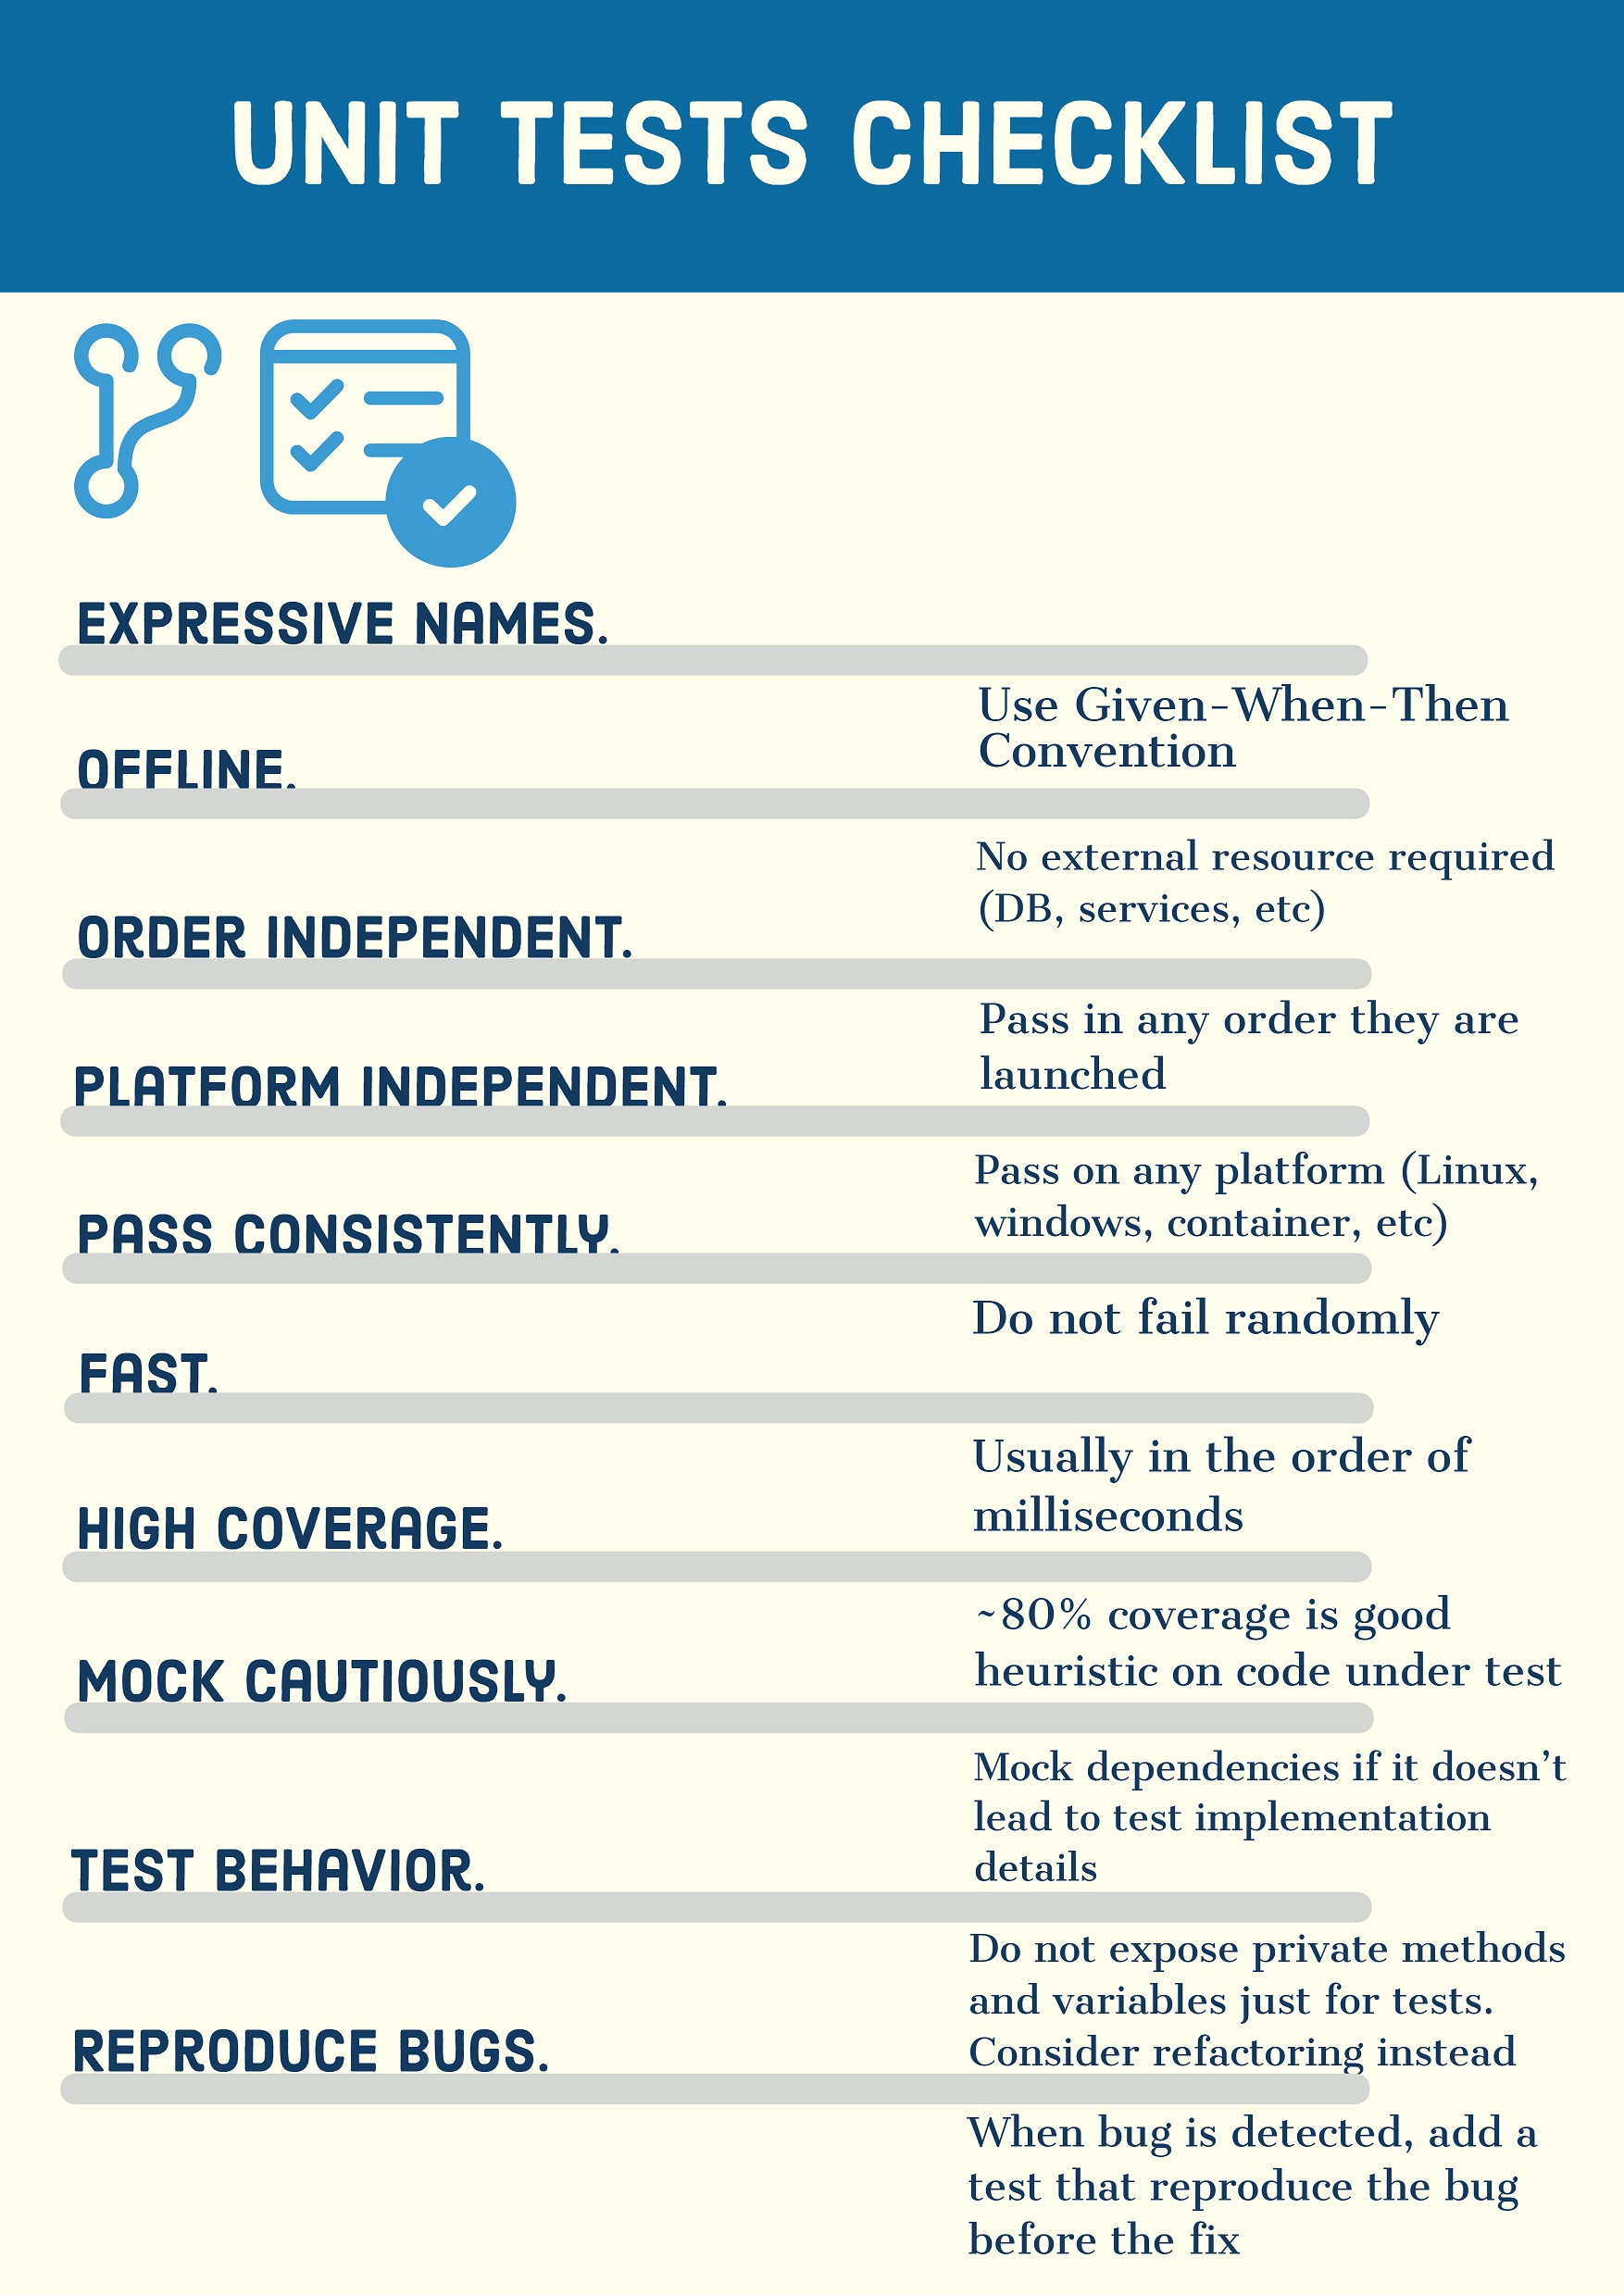 A Unit Tests Checklist Poster